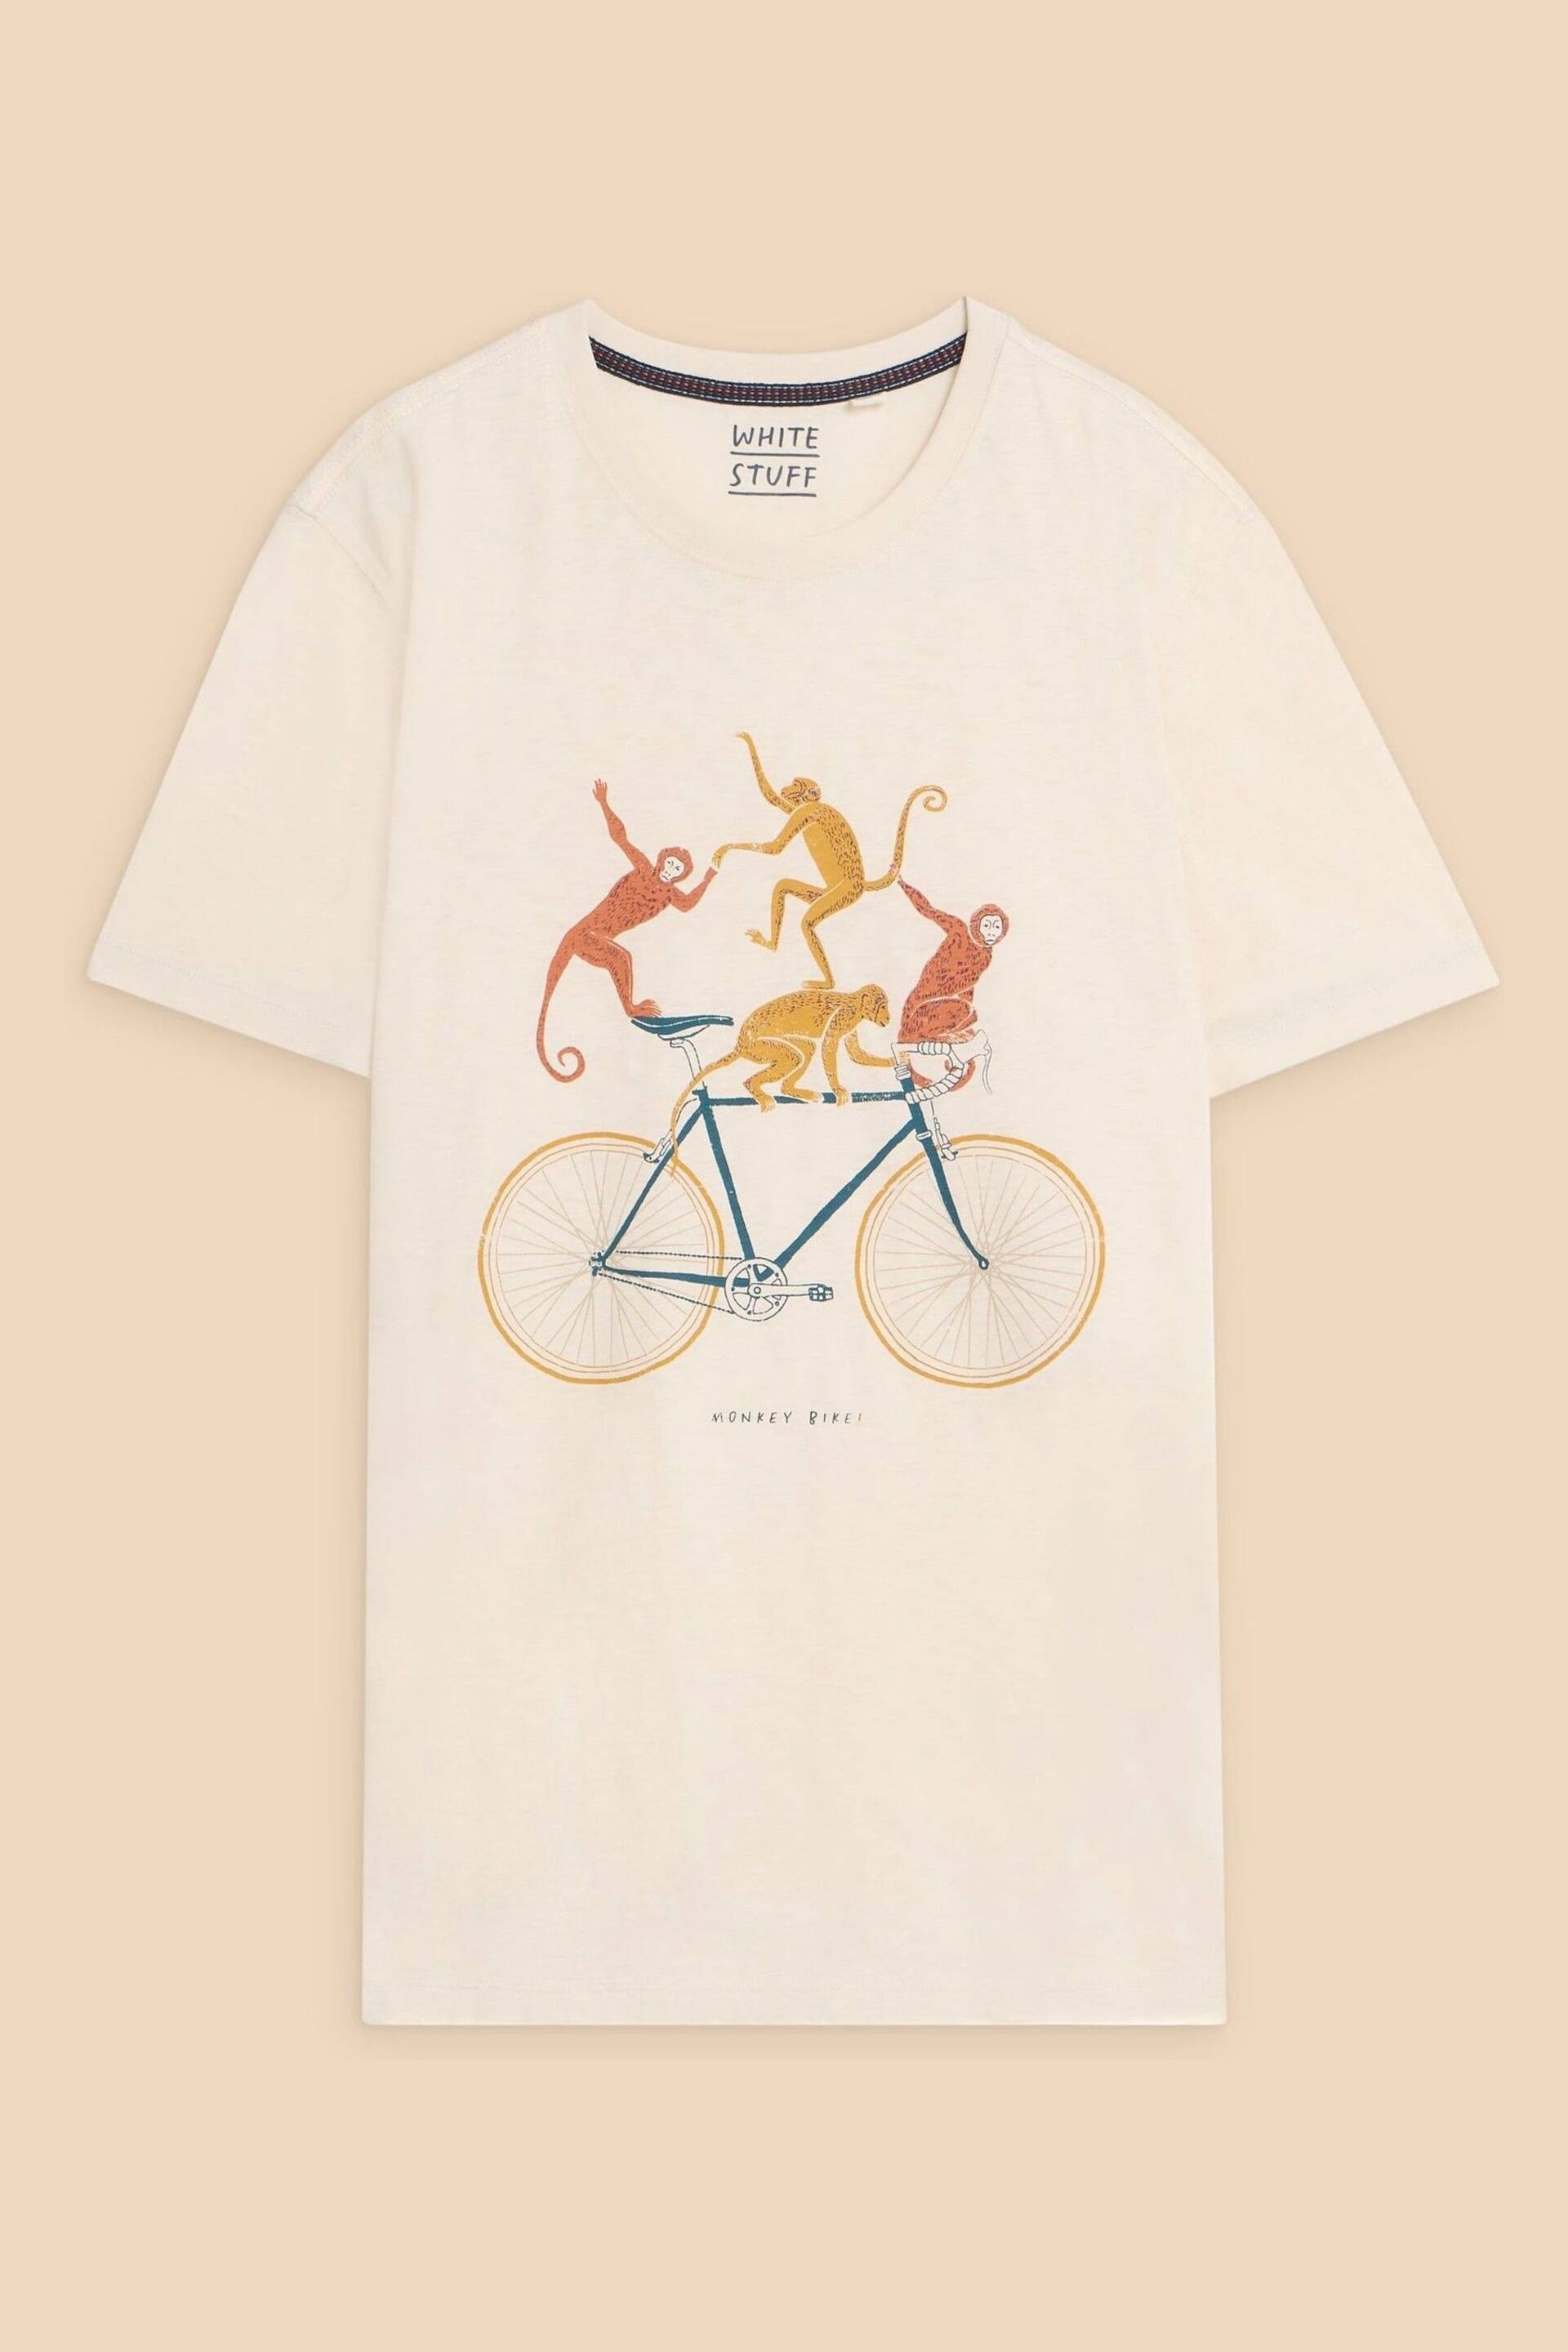 White Stuff White Monkey On A Bike Graphic T-Shirt - Image 5 of 7